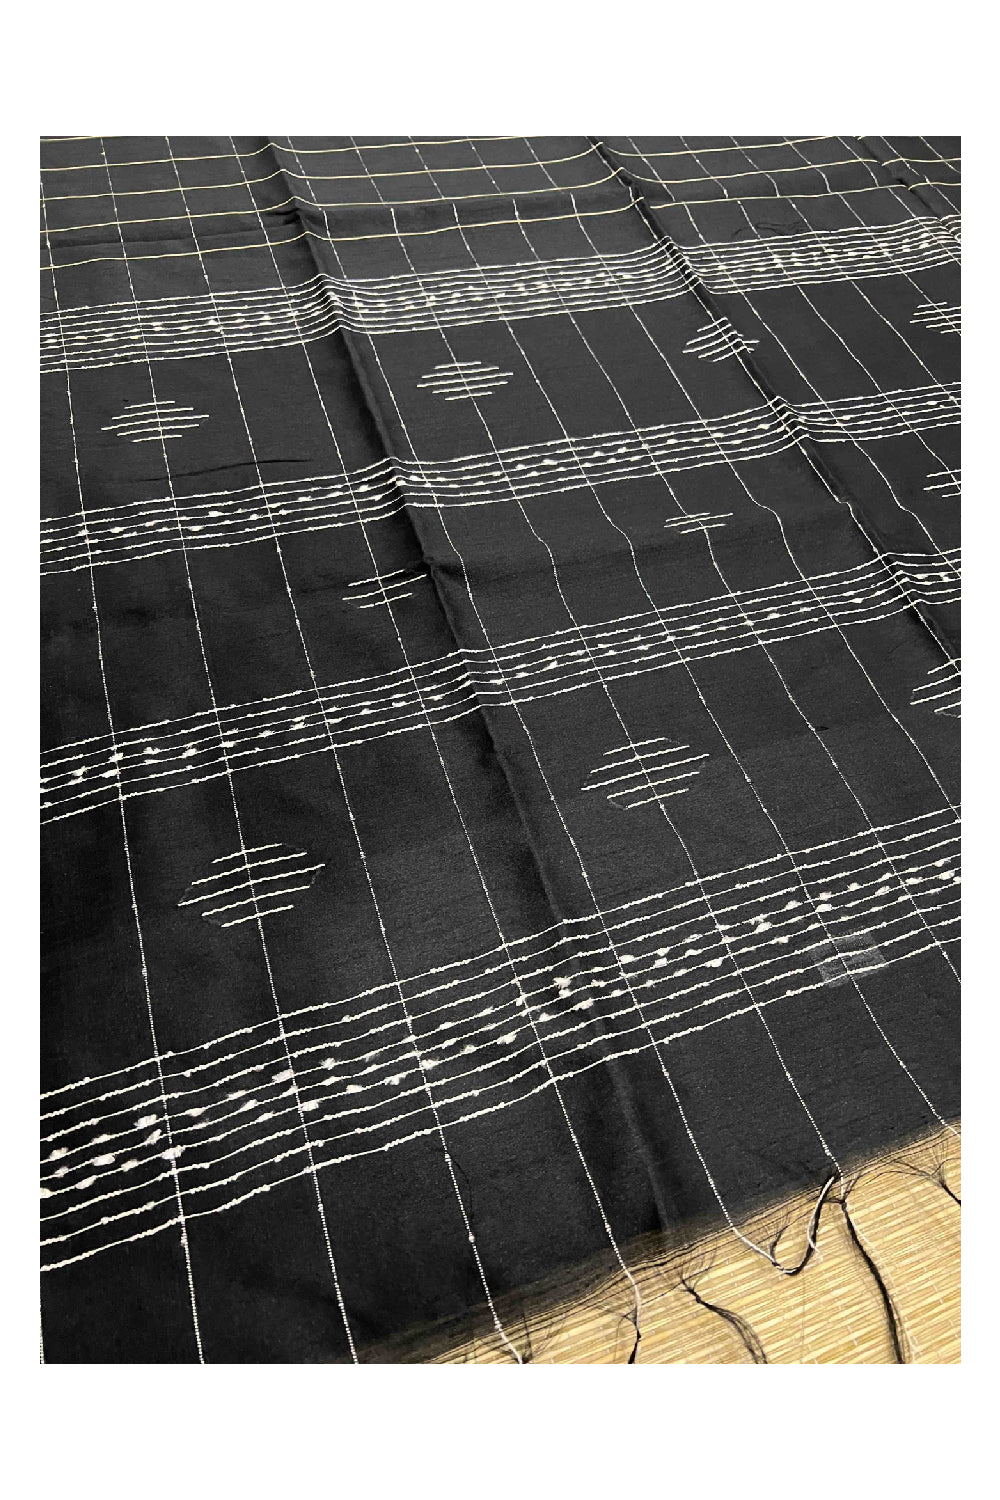 Southloom Black Semi Tussar Checkered Designer Saree with Tassels on Pallu